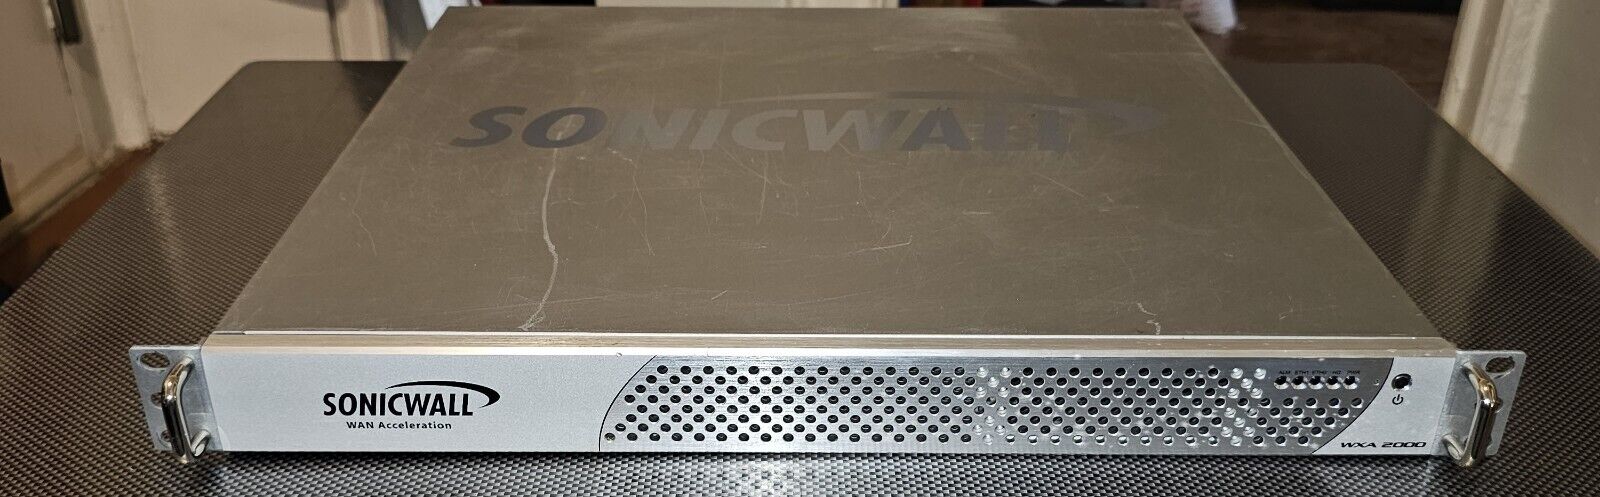 Sonicwall WAN Acceleration WXA 2000 Rackmount Security Appliance 1RK24-07E (H)